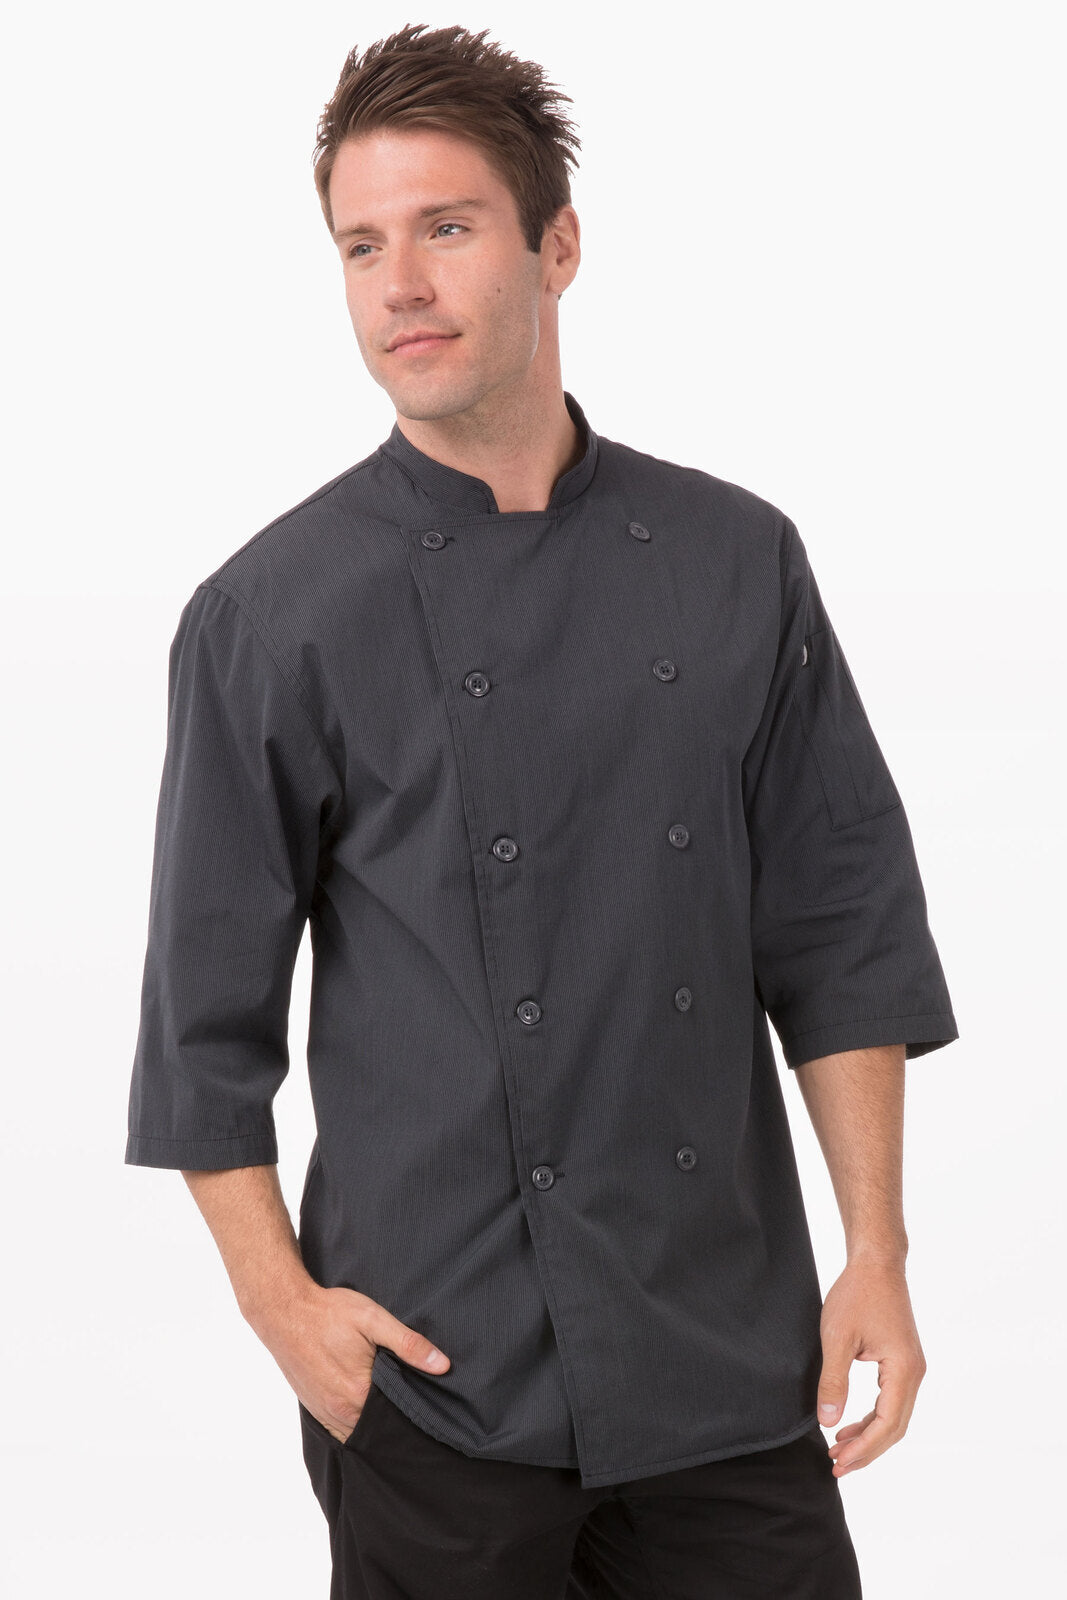 Chef Works - Brighton Chef Jacket